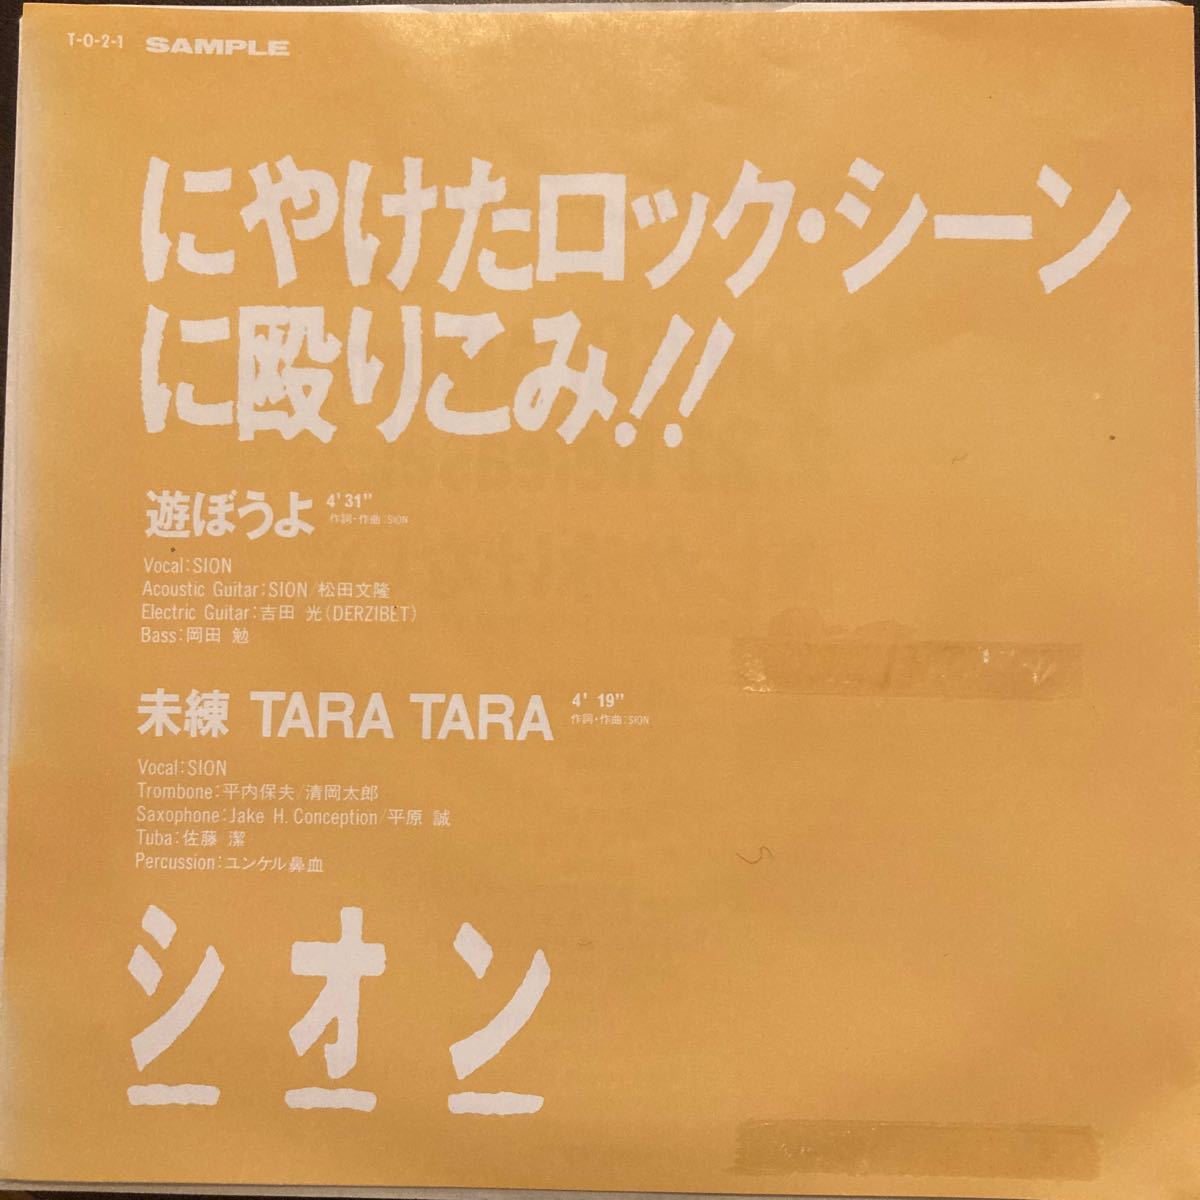 SION シオン / 遊ぼうよ - 未練TARA TARA 邦楽 EP 7inch 見本盤 非売品 プロモ レコード レア_画像1